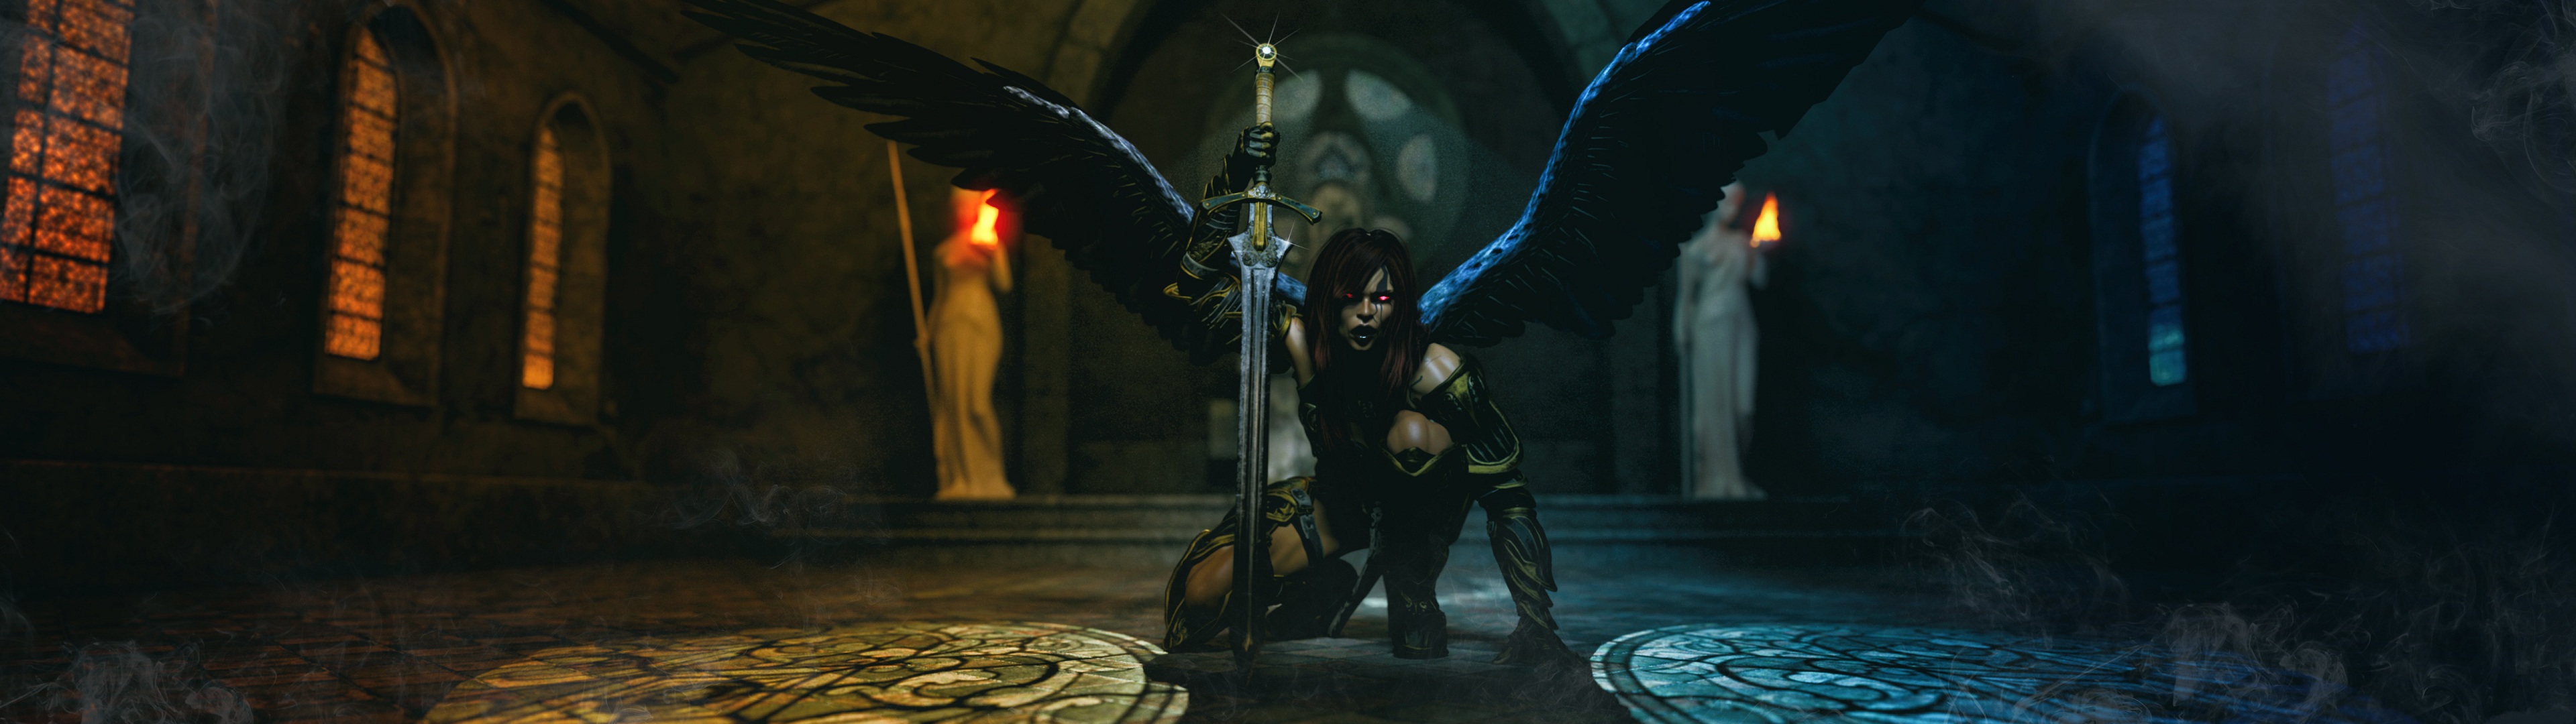 Fantasy Angel Warrior 3840x1080